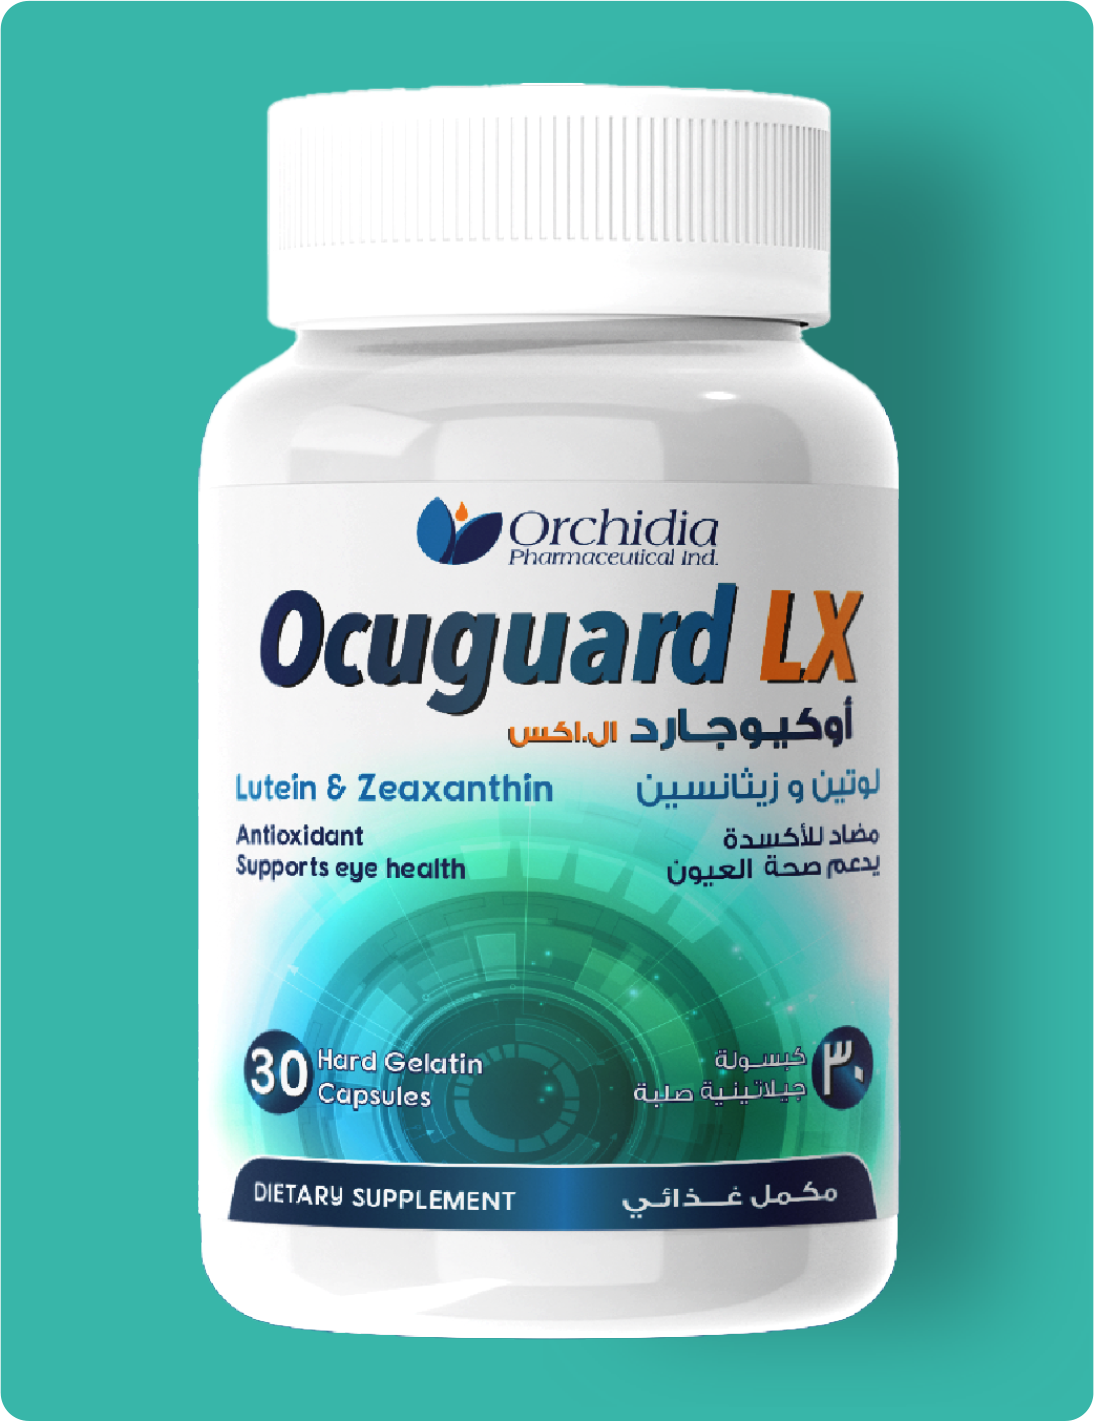 Ocuguard LX